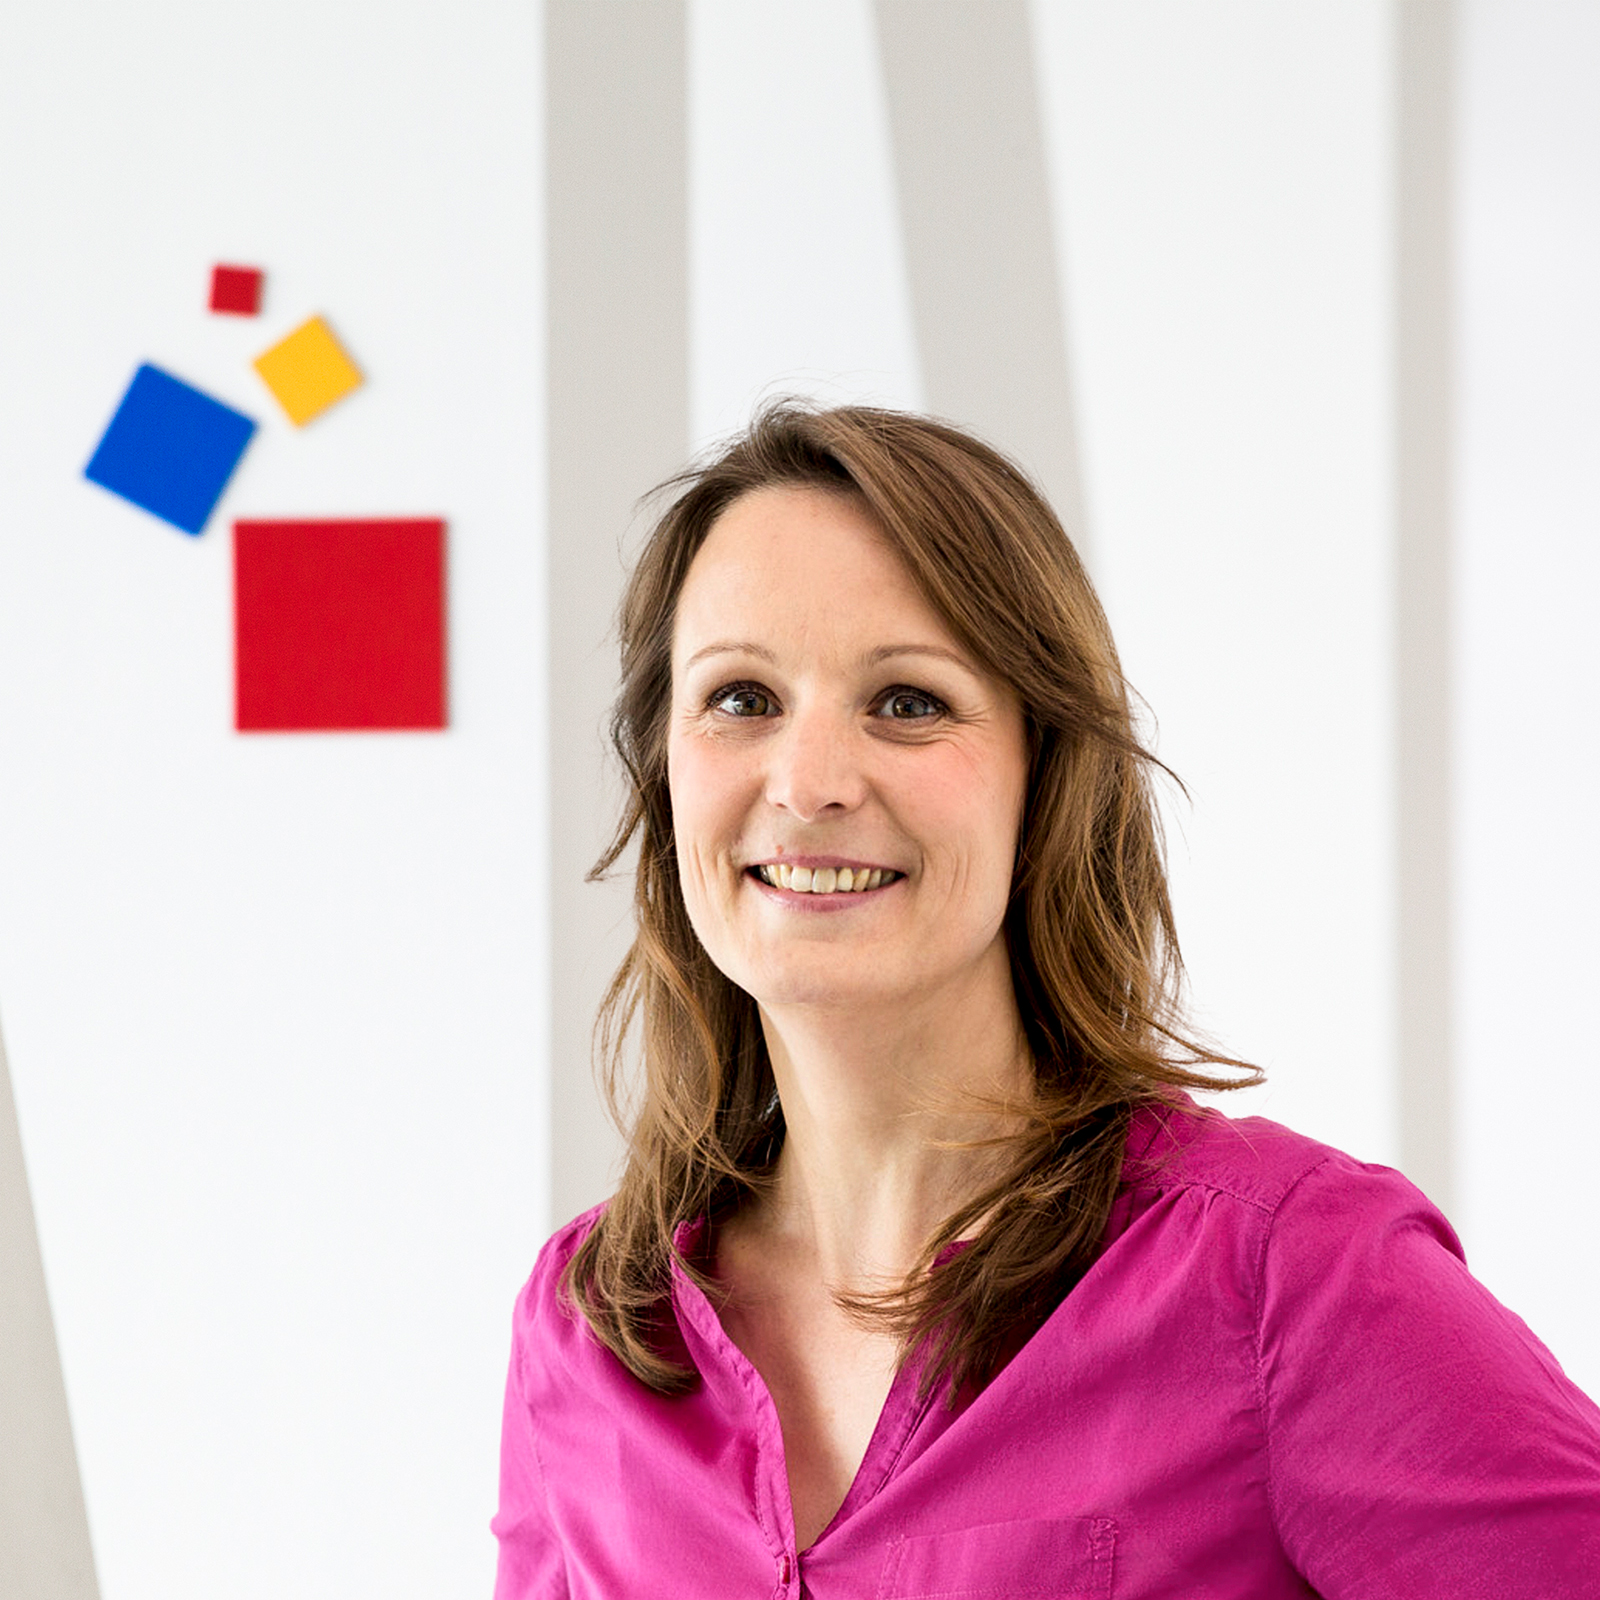 Ellen Matheis, Coordinator Product Management Web Solutions at Messe Frankfurt